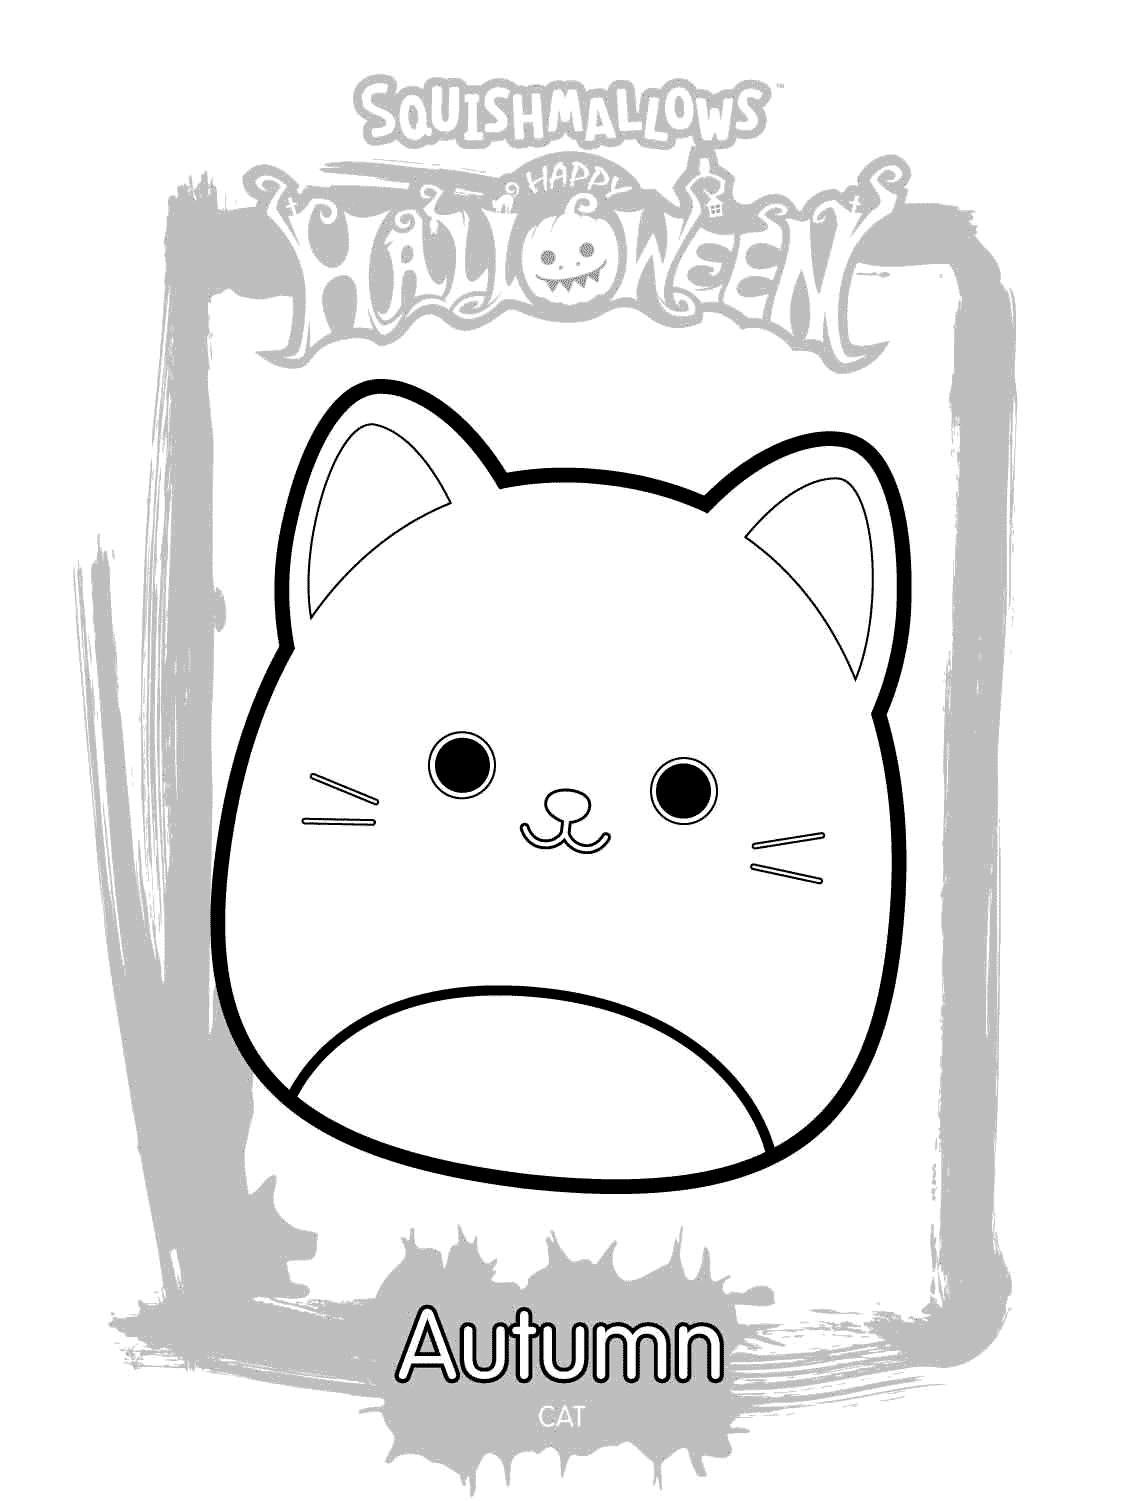 Halloween Cat Squishmallows